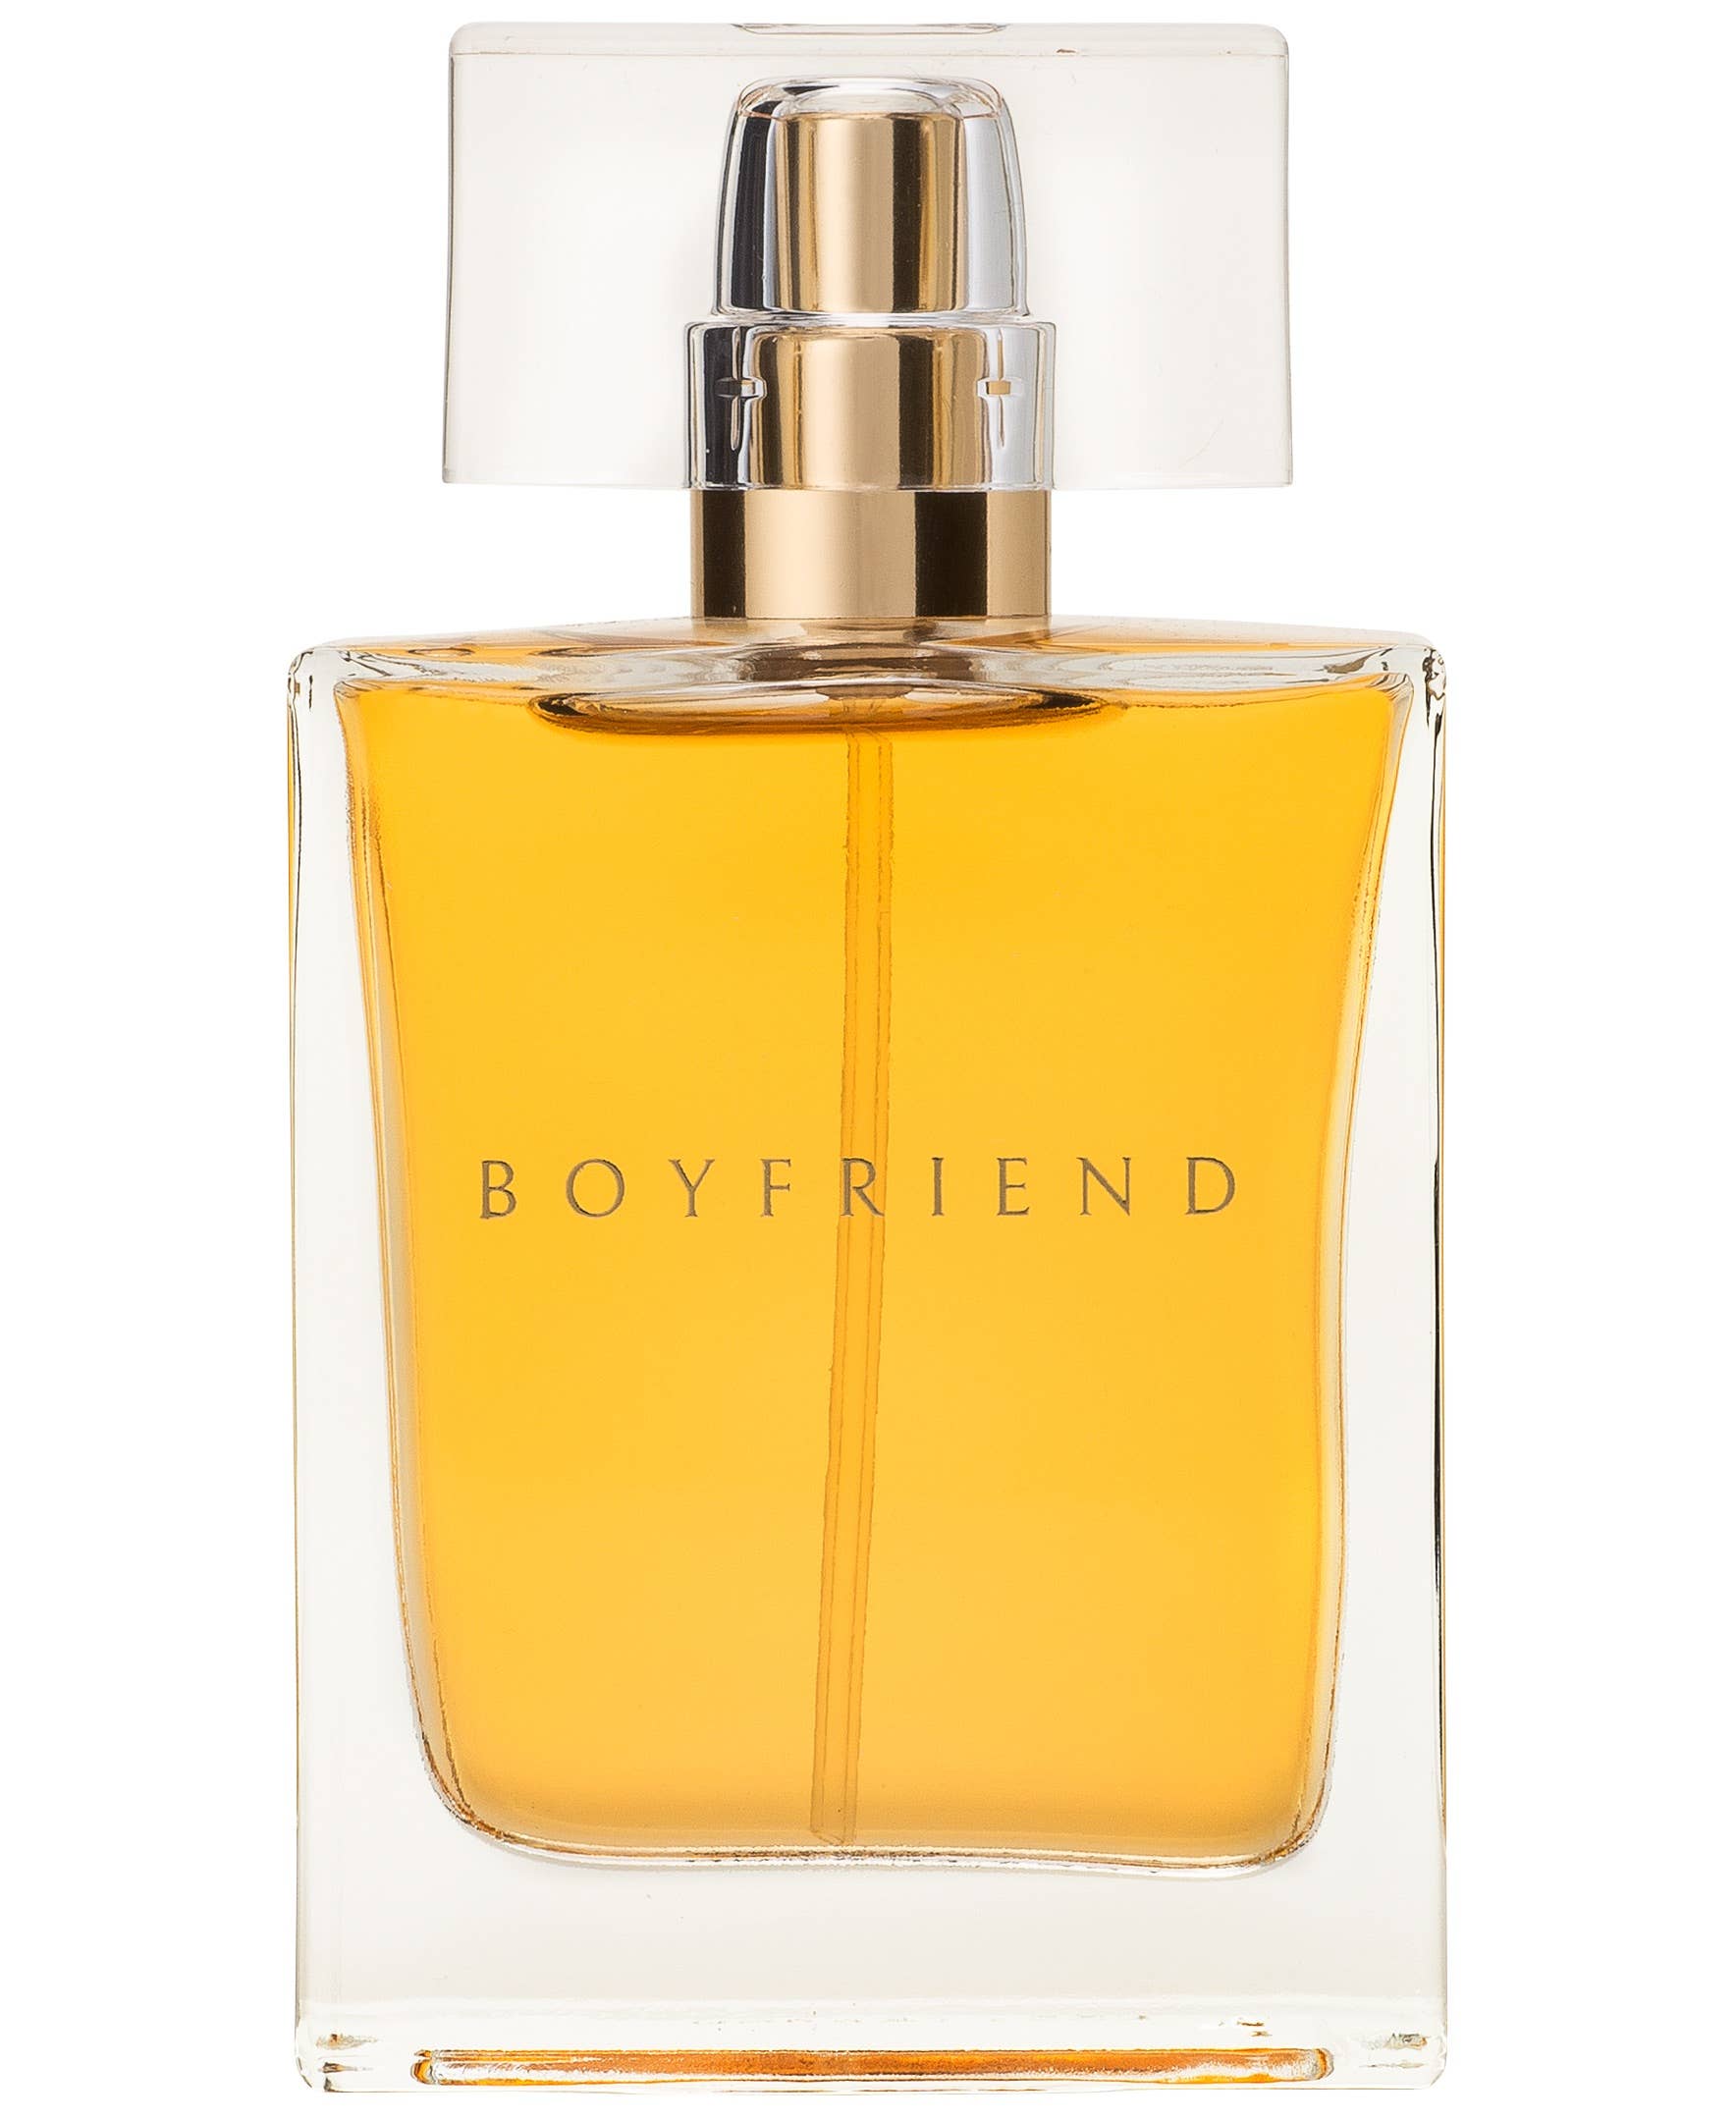 Boyfriend Perfume - Boyfriend Eau de Parfum Spray 1.7 oz/50 mL